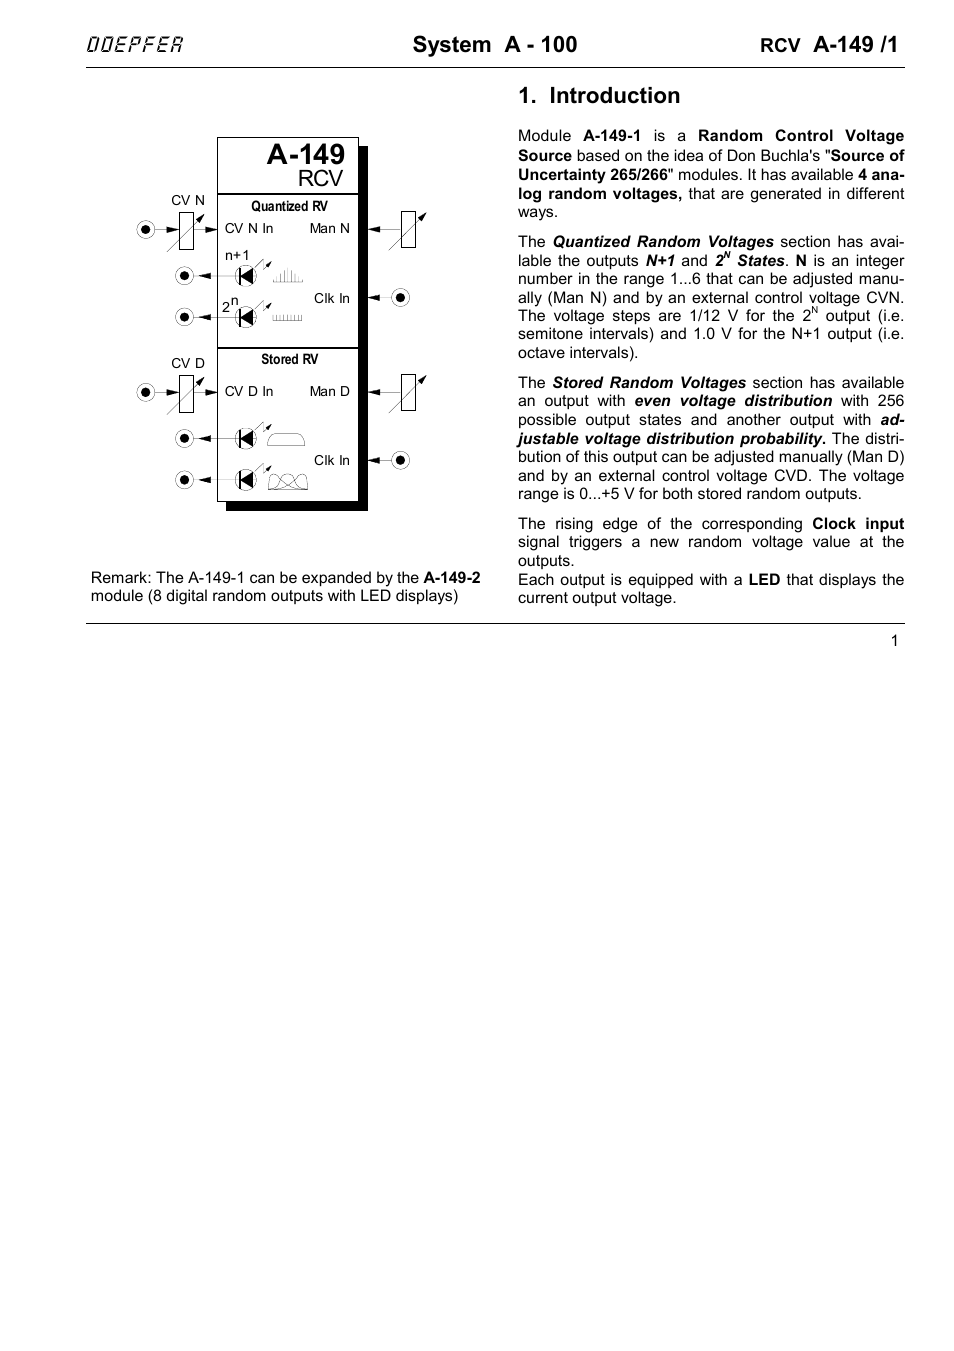 A-149-1 Quantized/Stored Random Voltages